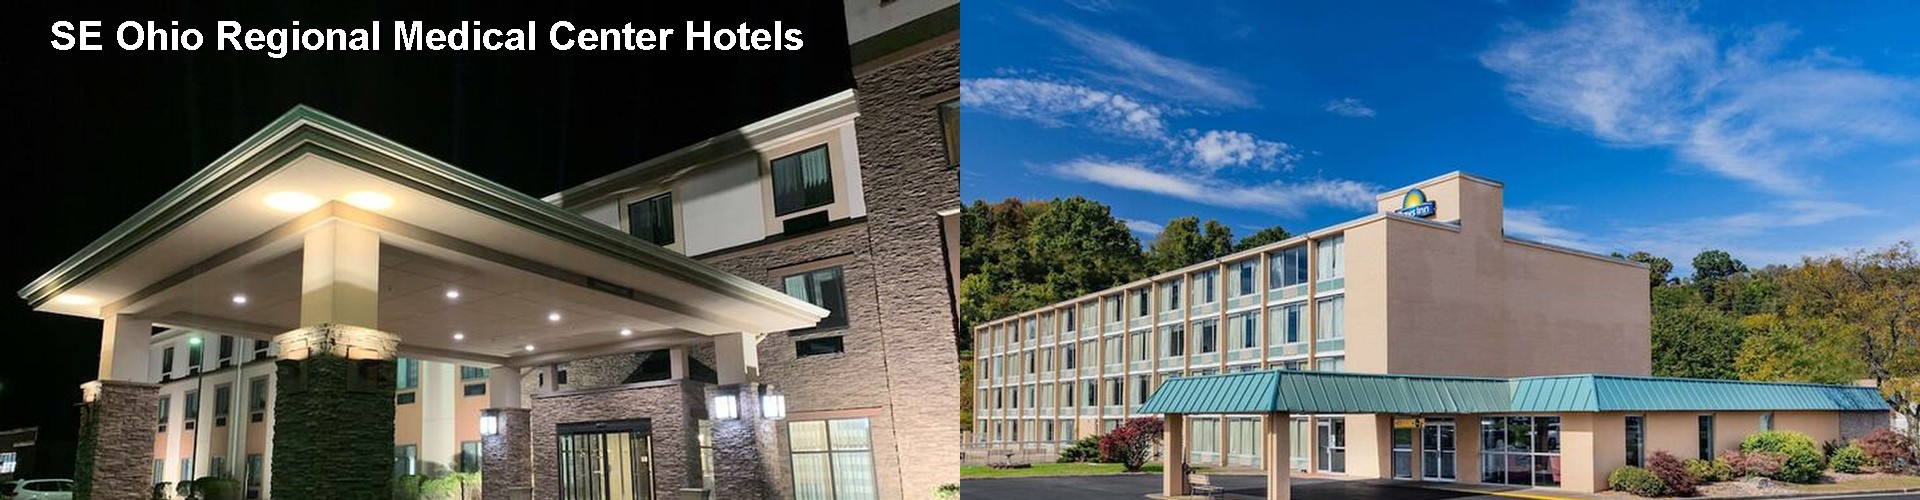 5 Best Hotels near SE Ohio Regional Medical Center